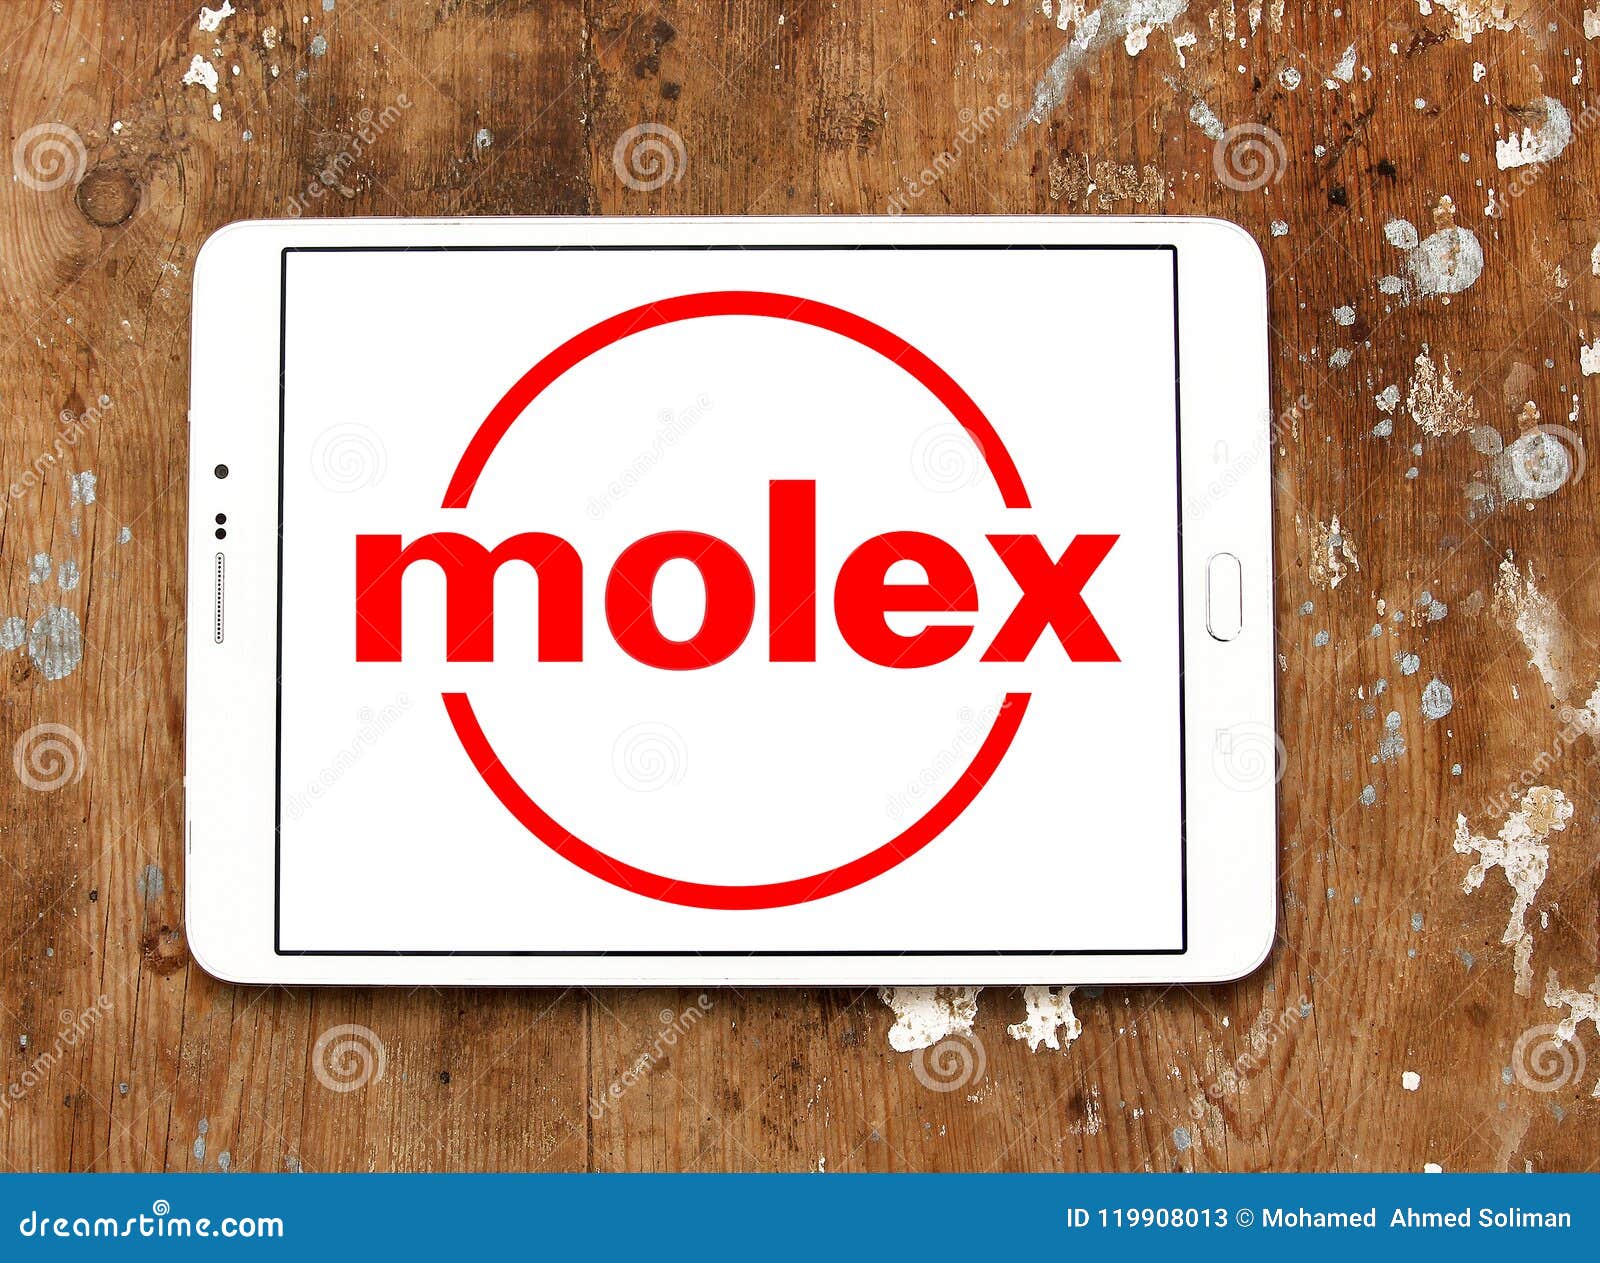 Molex company logo editorial stock photo. Image of commercial - 122206358